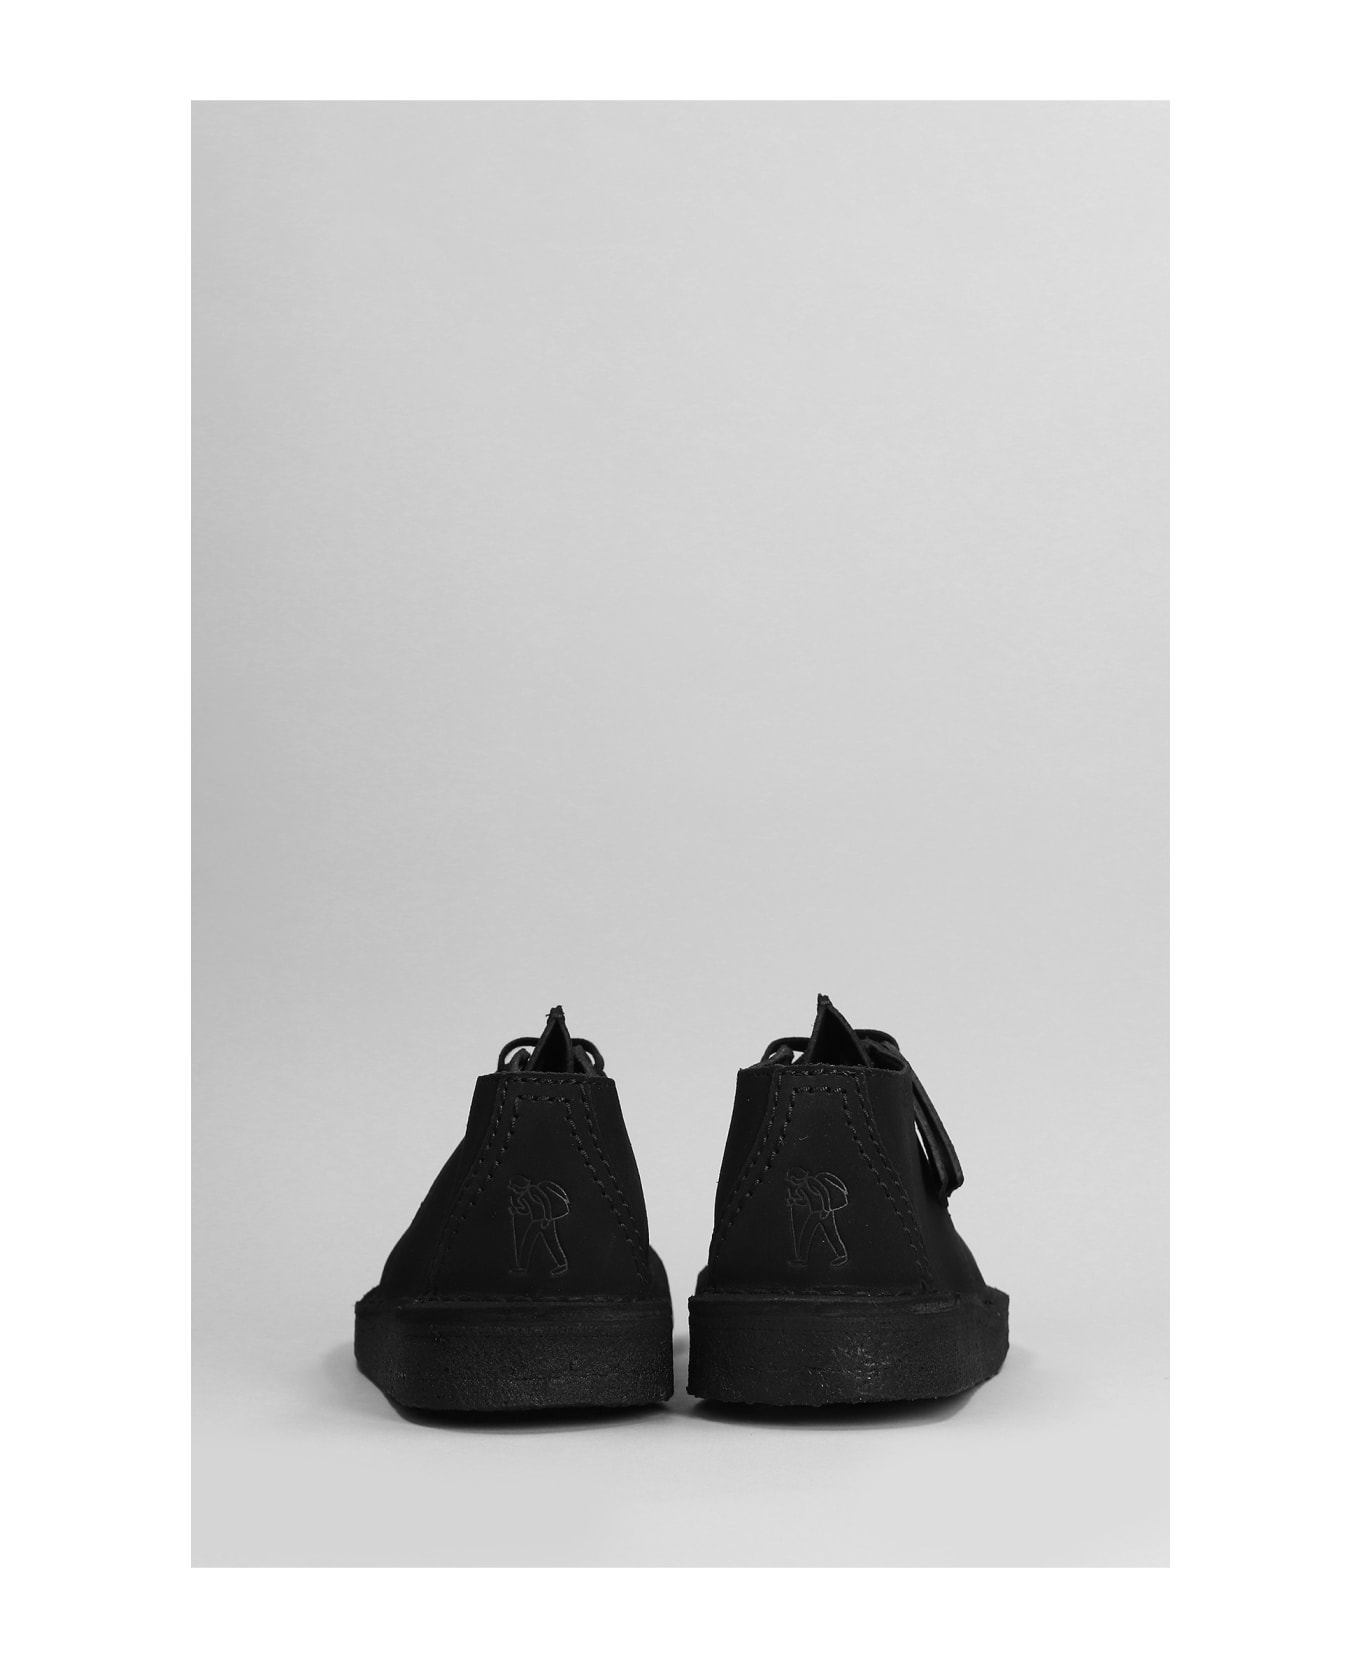 Clarks Desert Trek Lace Up Shoes In Black Suede - black